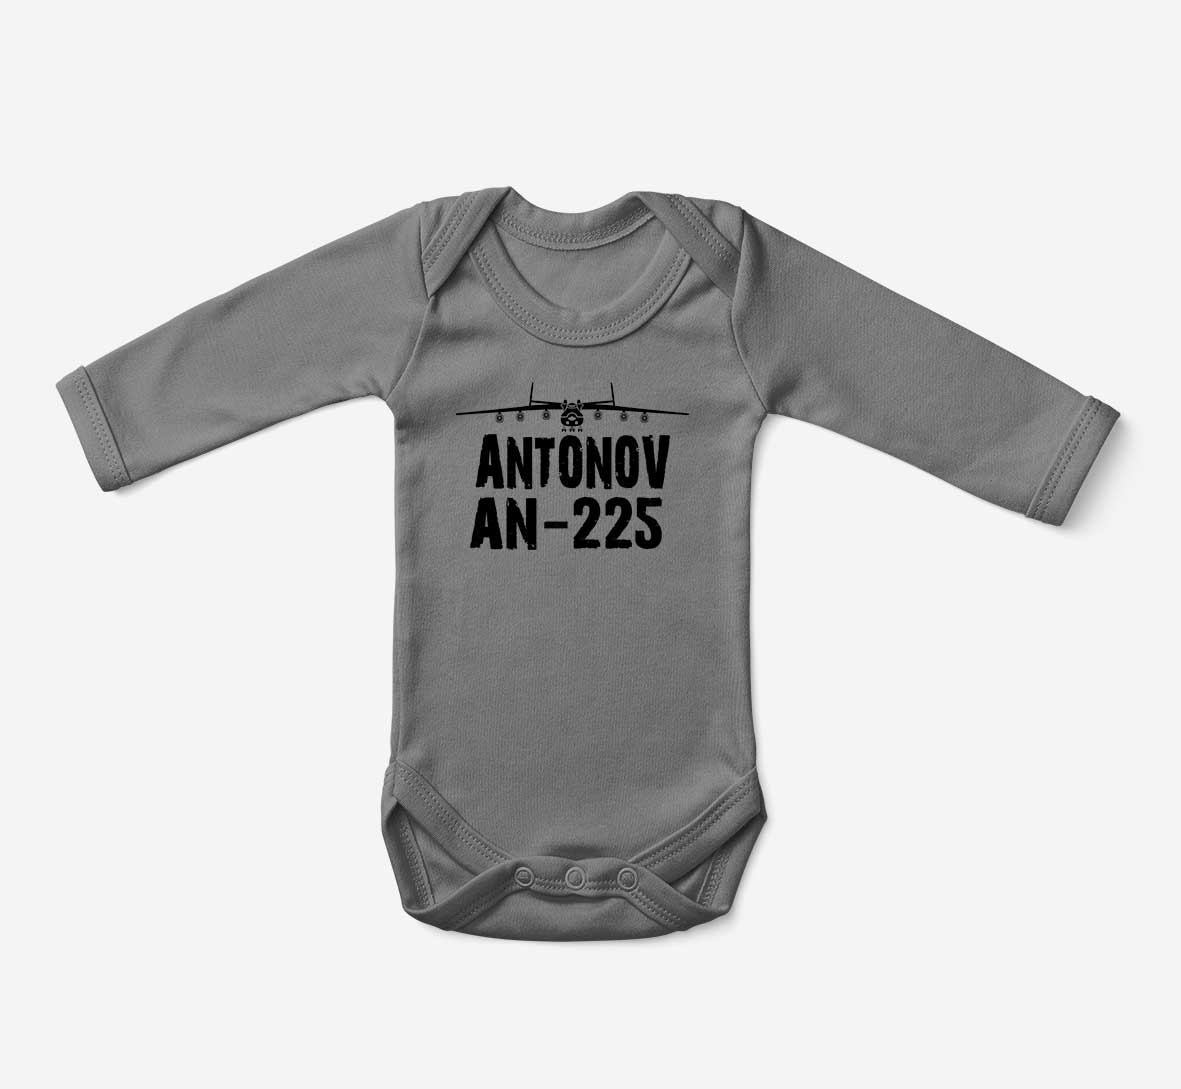 Antonov AN-225 & Plane Designed Baby Bodysuits